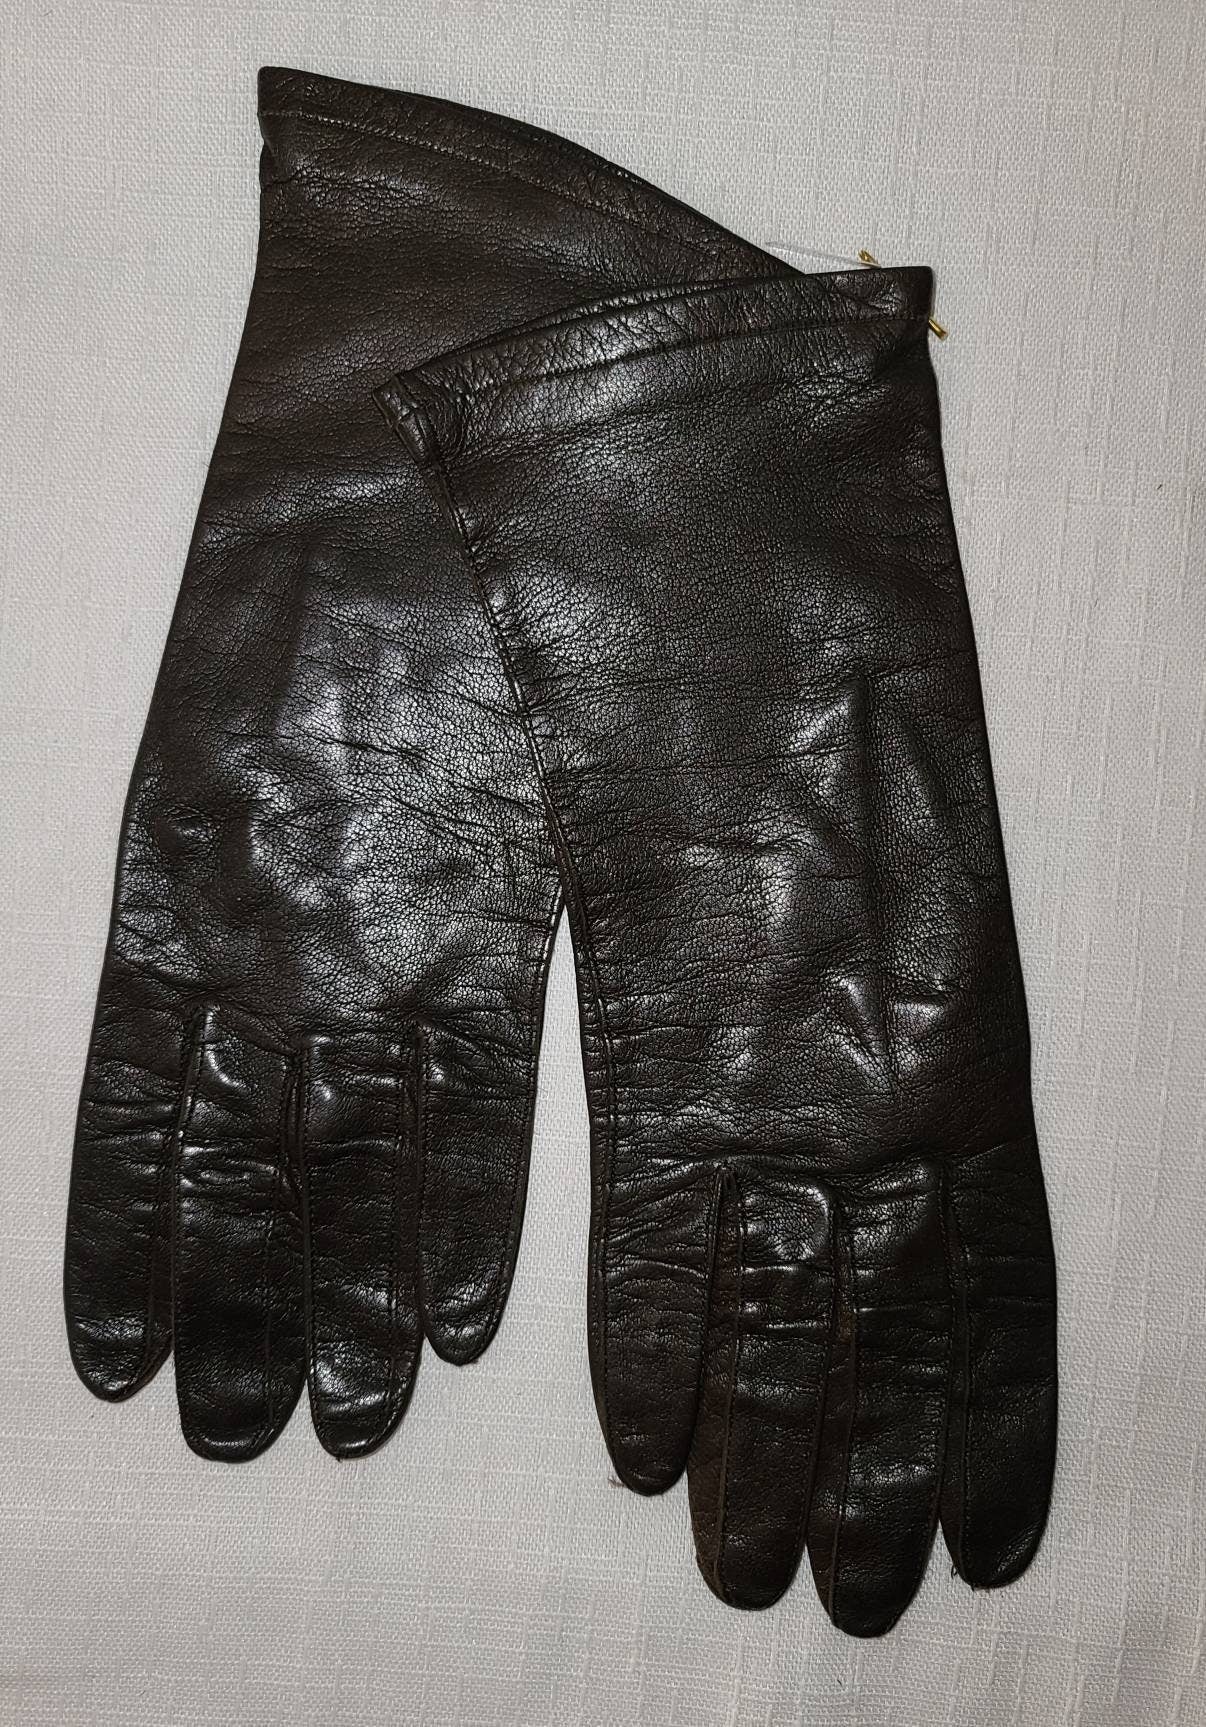 Vintage Leather Gloves 1950s 60s Thin Dark Brown Soft Black Midlength Leather Gloves Rockabilly Boho S M